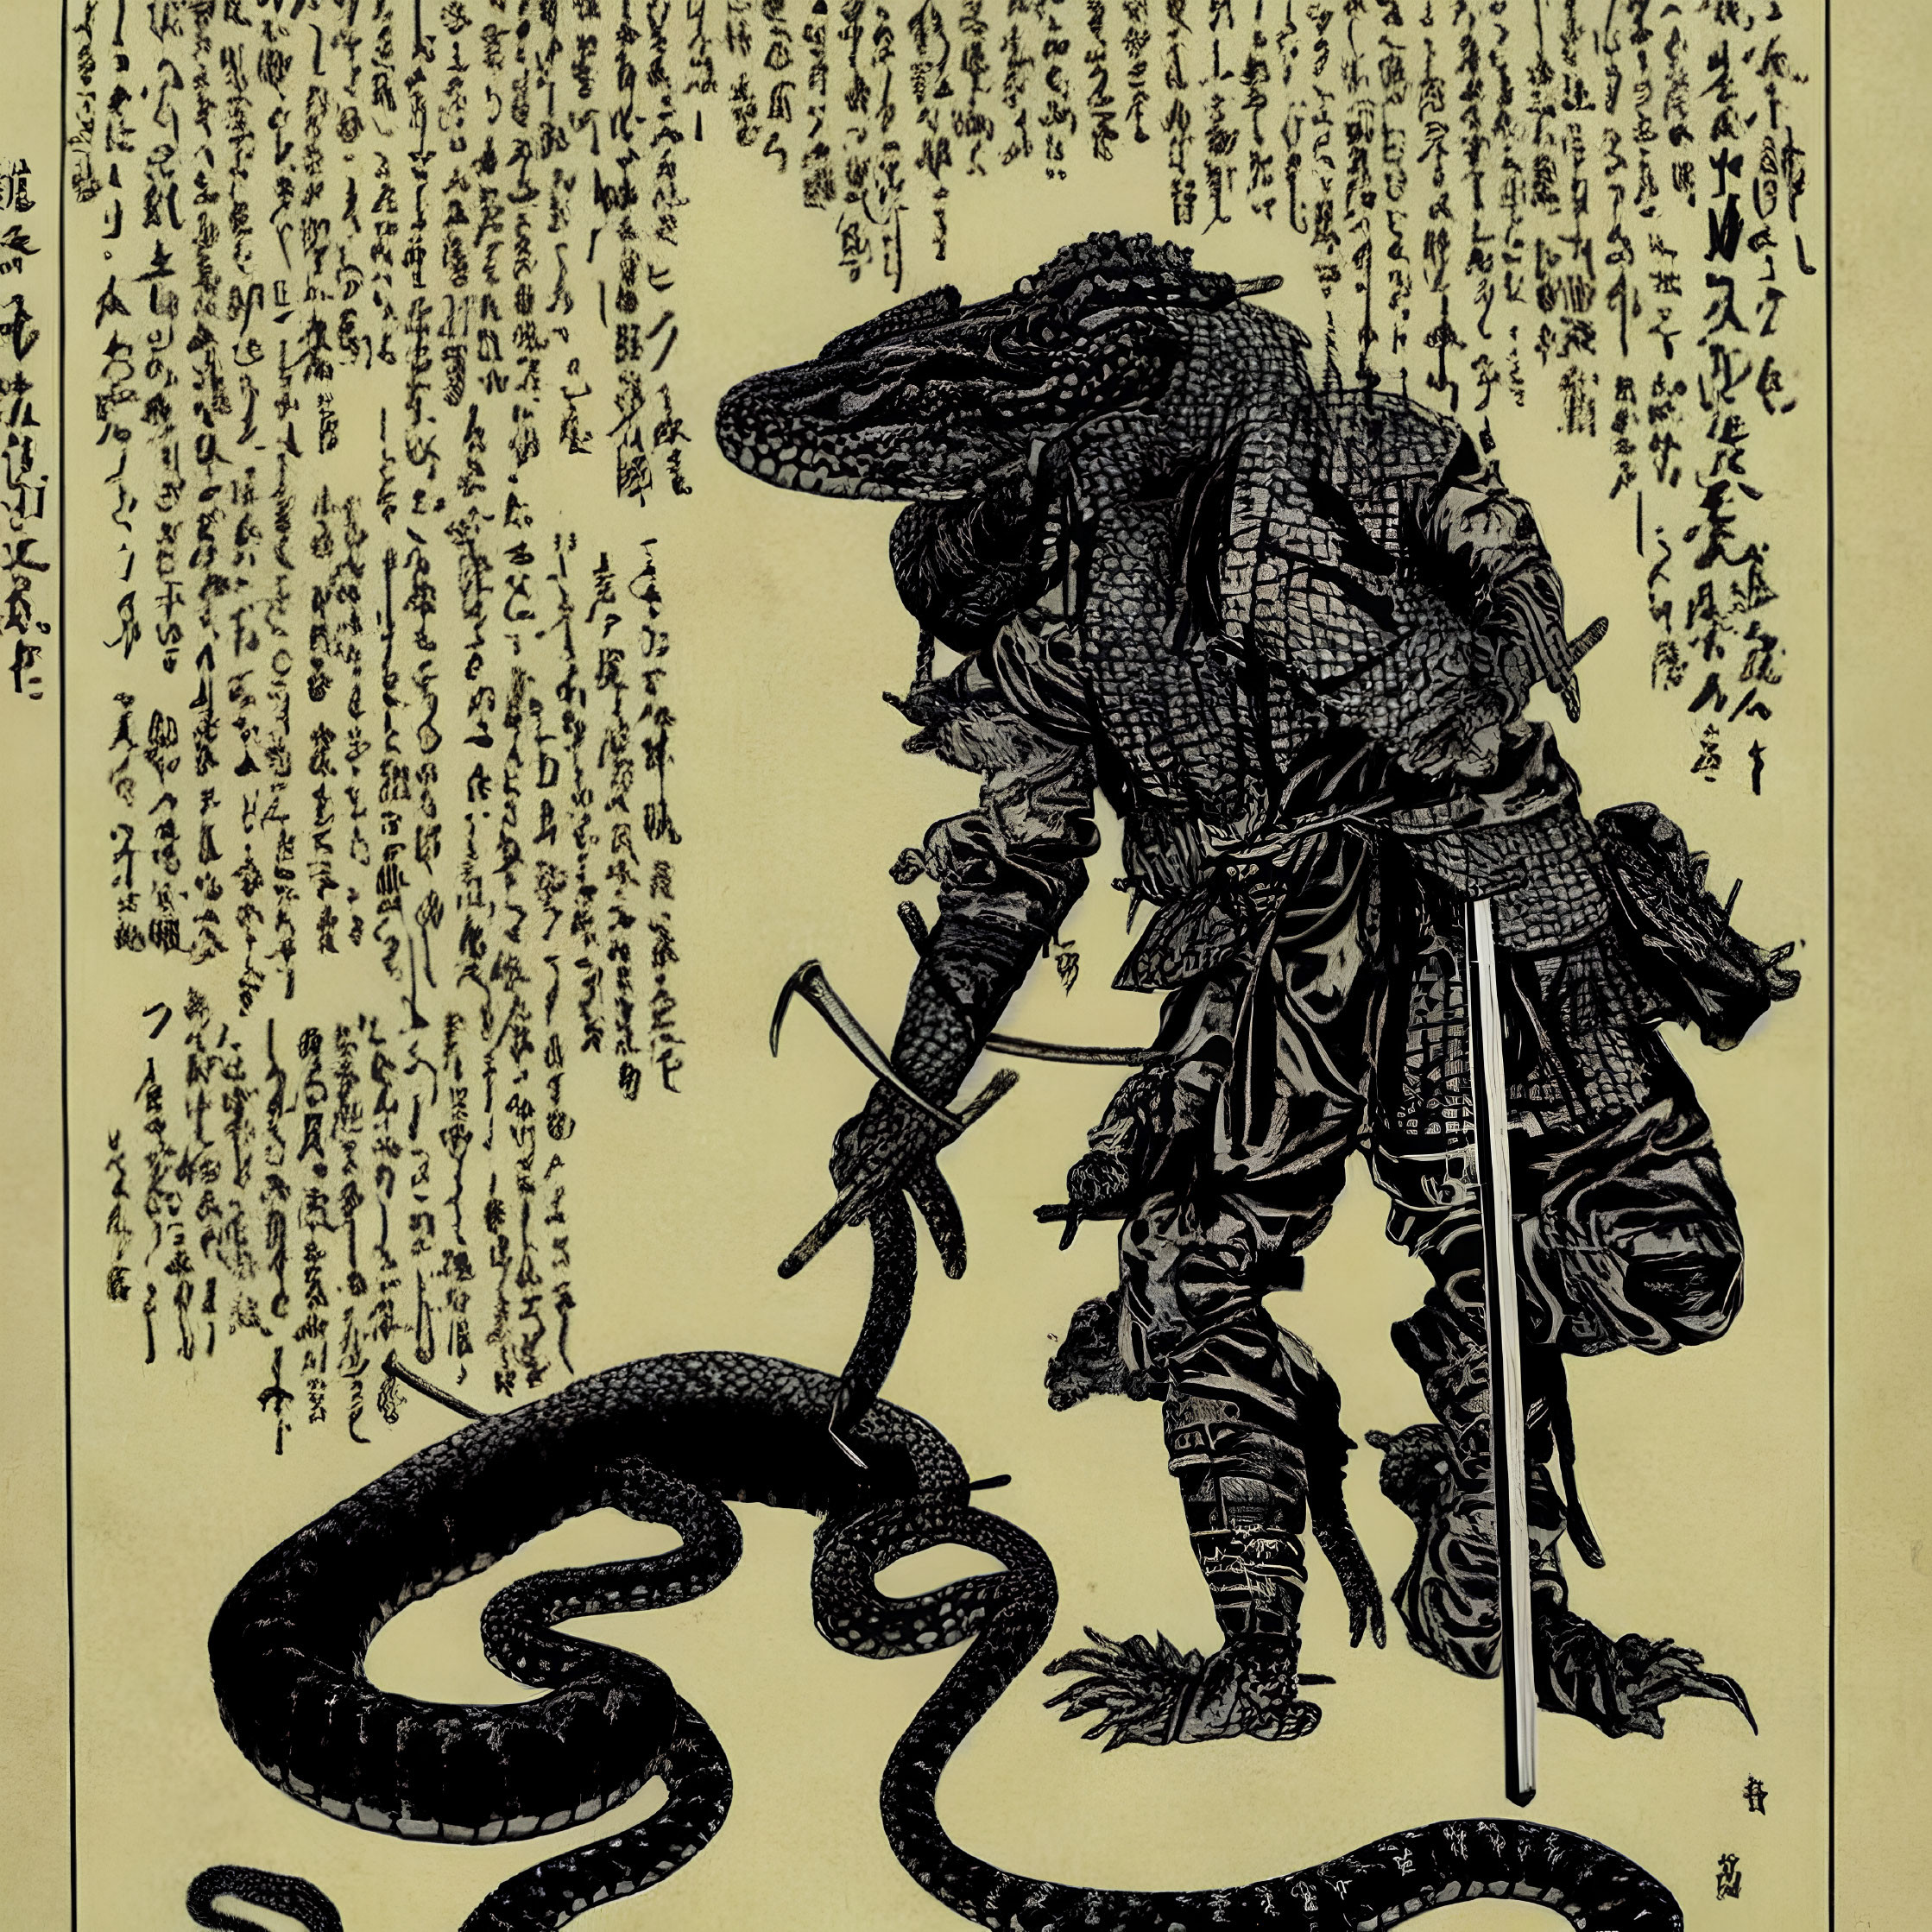 Japanese woodblock print: Samurai with crocodile head battles snake, kanji text in background